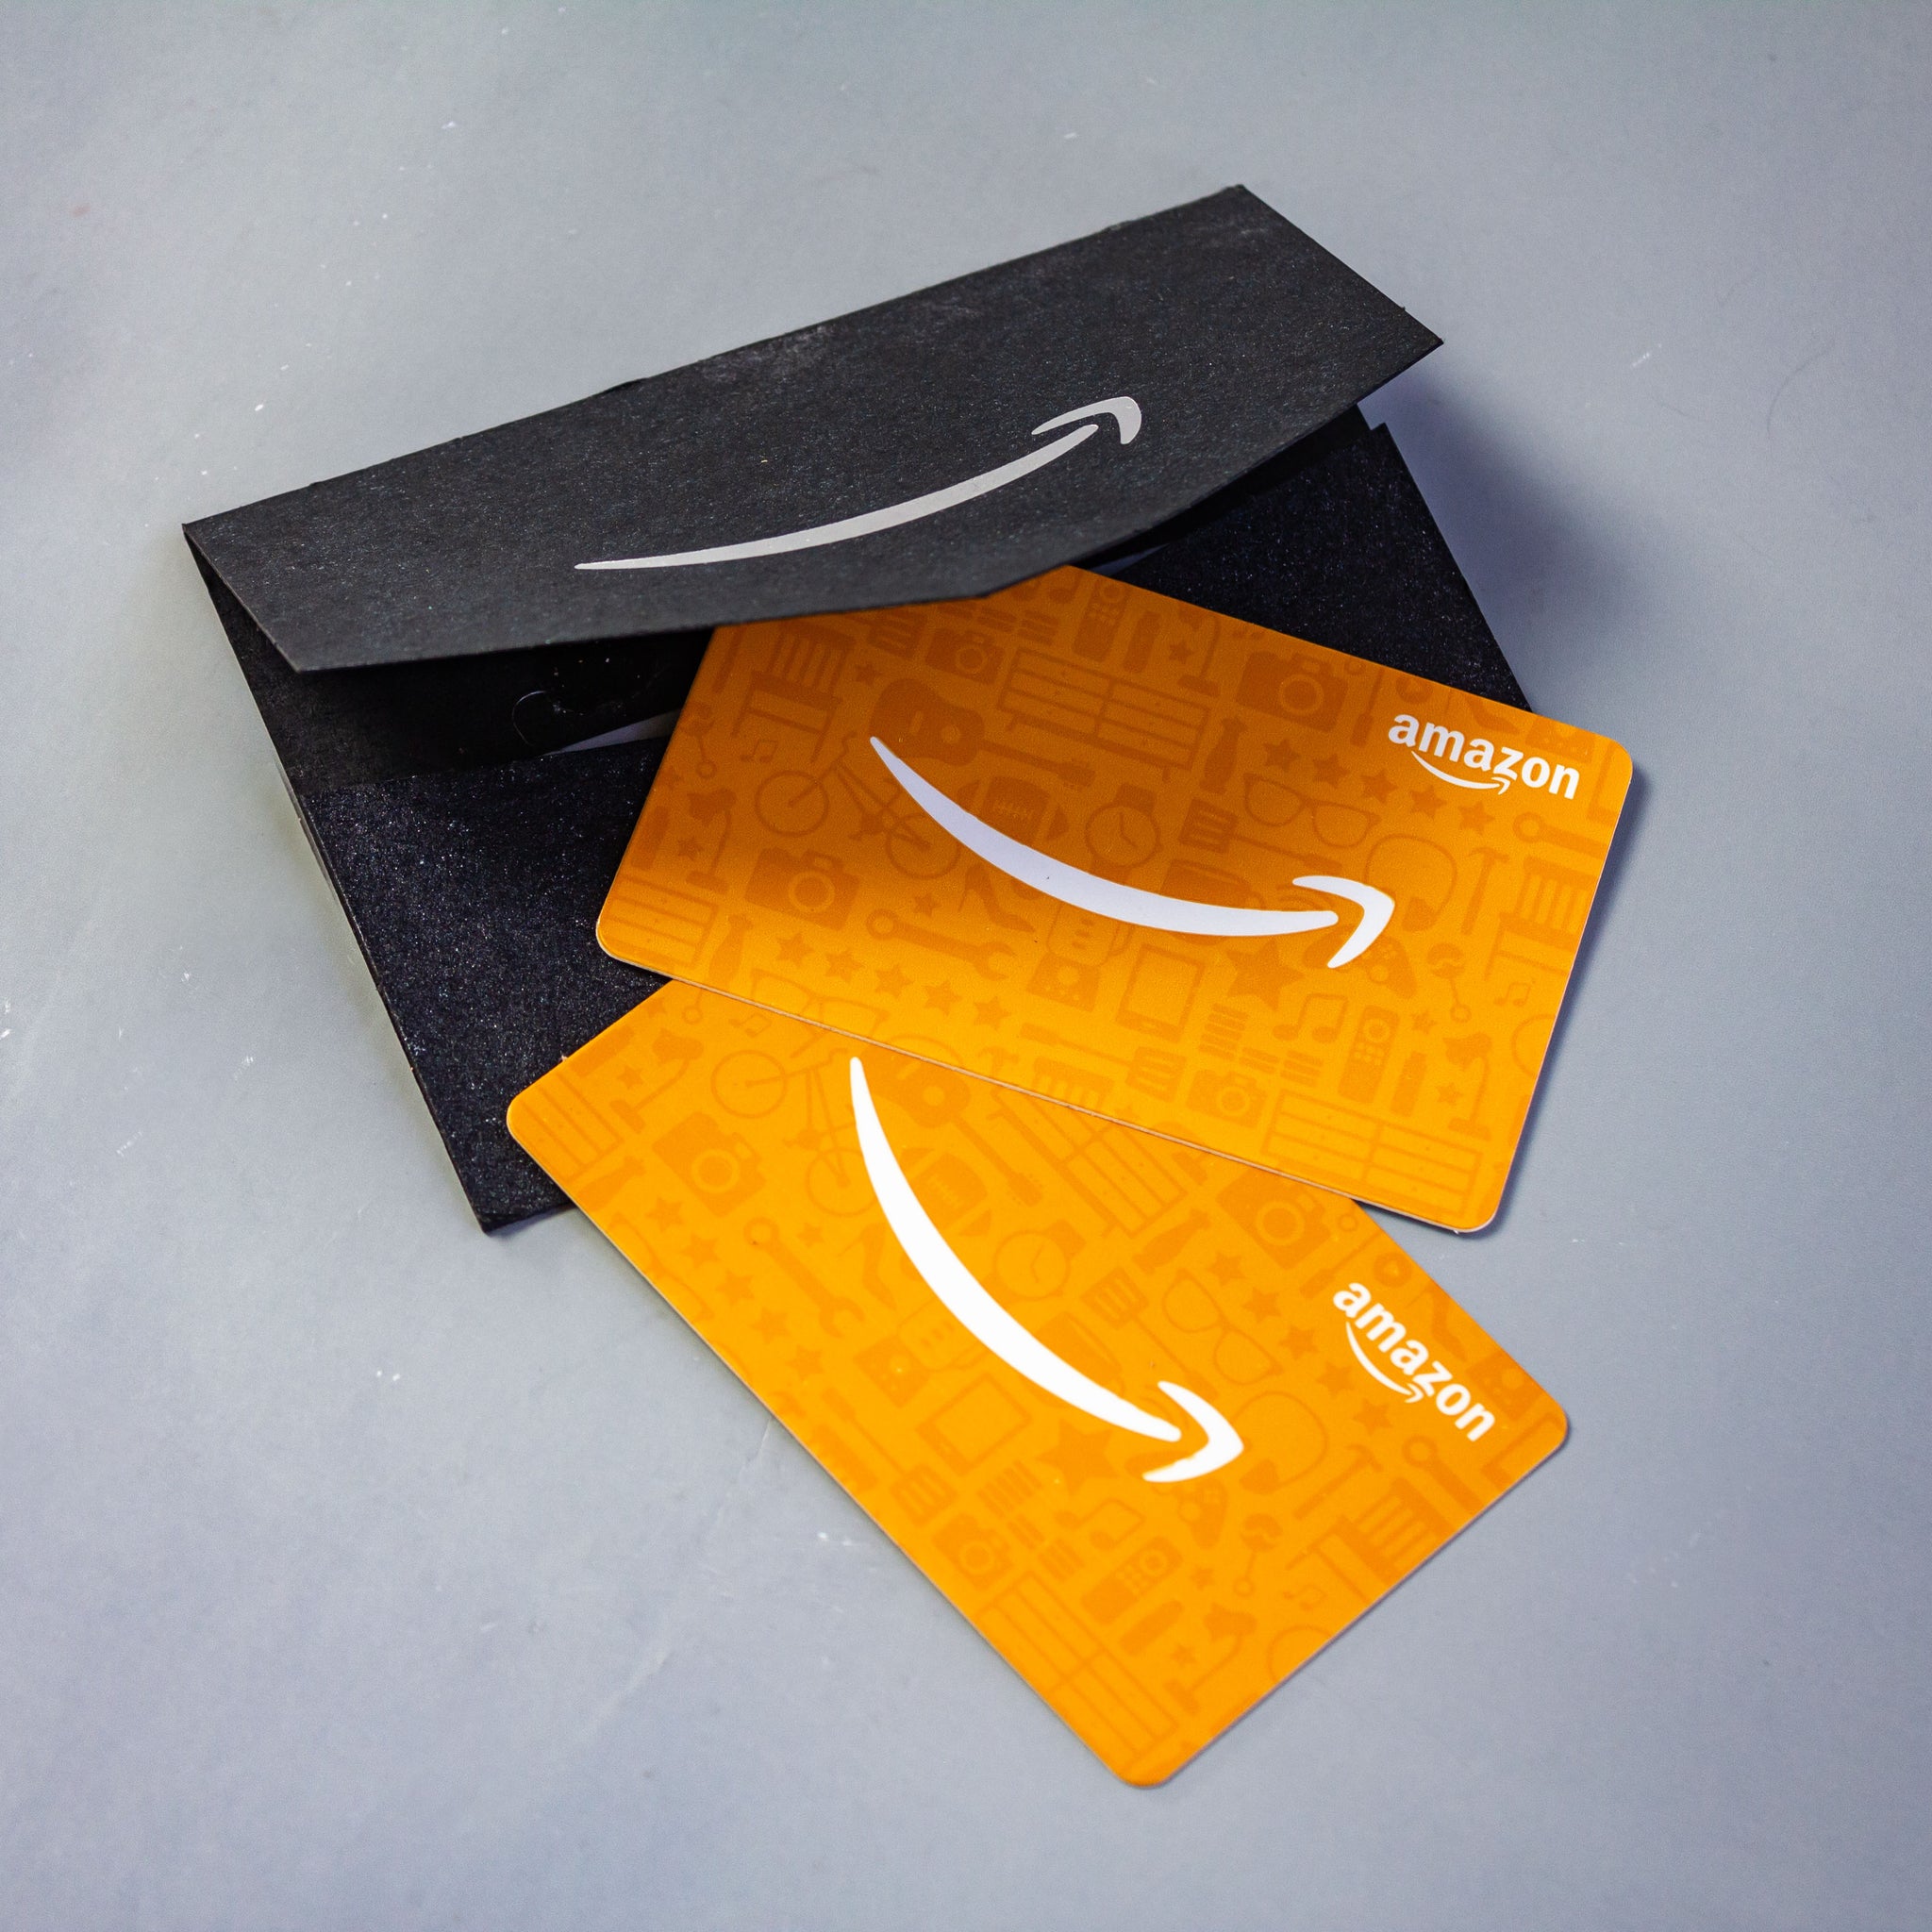 Buy Amazon Gift Card 15 USD - Amazon - UNITED STATES - Cheap - G2A.COM!